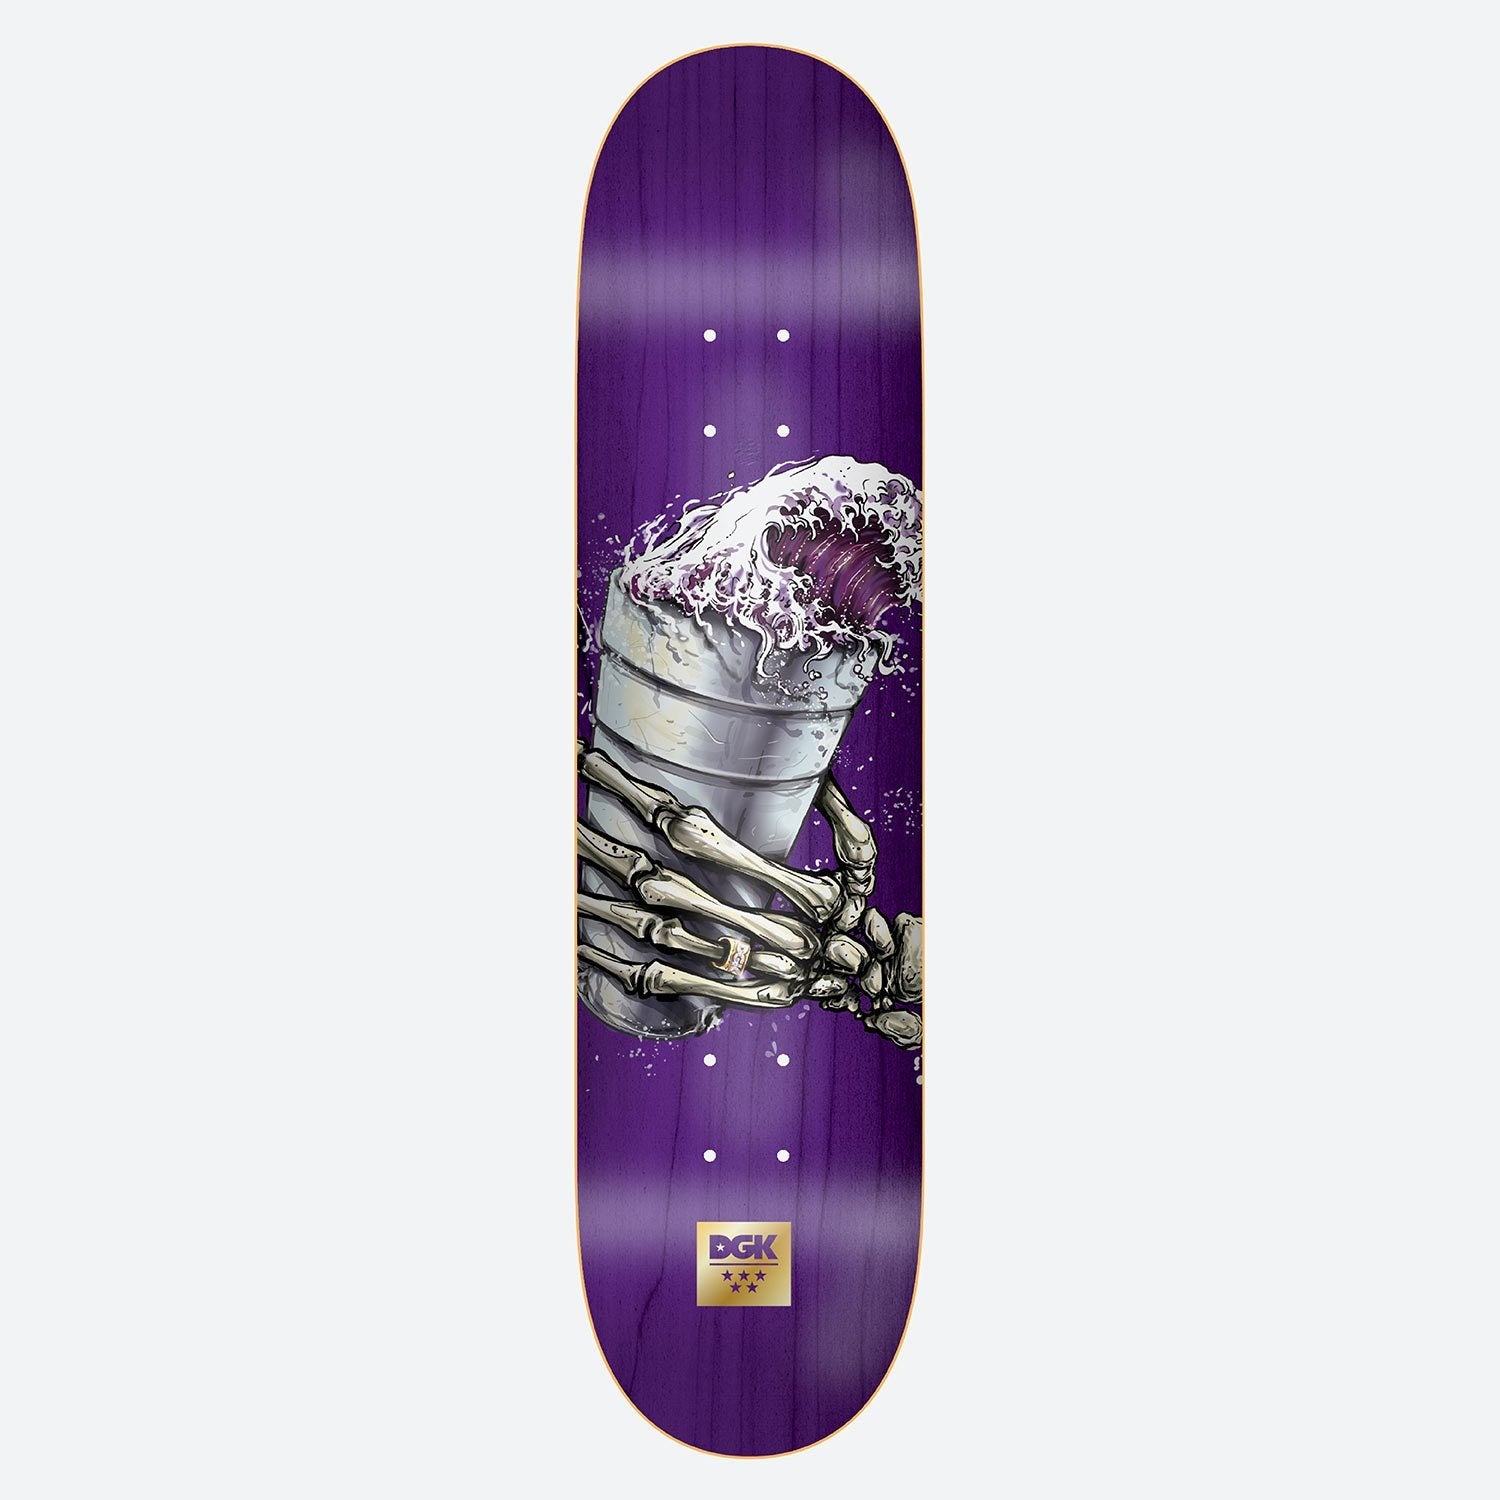 Dgk - Skateboard - Deck - Sippin' 8.1" (Multi) Deck